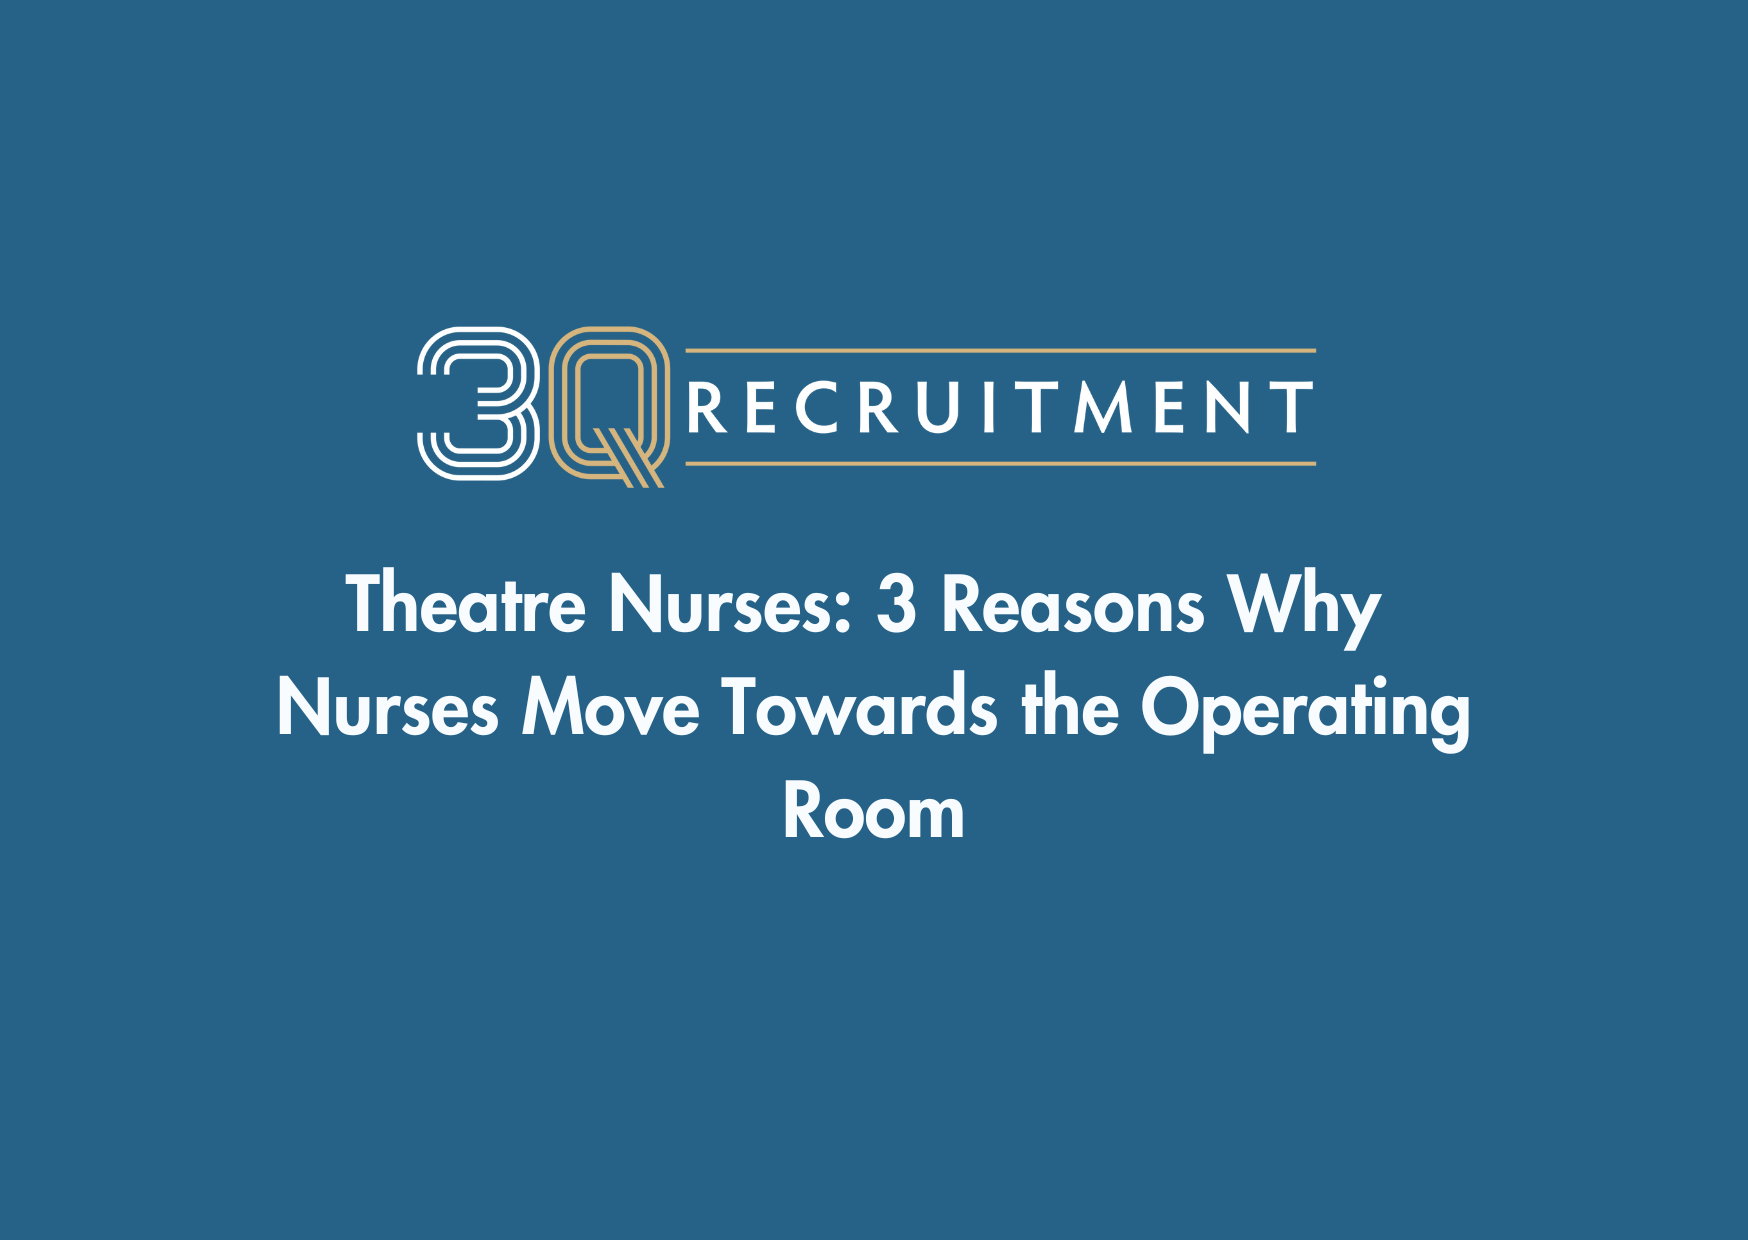 3Q Recruitment Theatre Nurses: 3 Reasons Why Nurses Move Towards the Operating Room